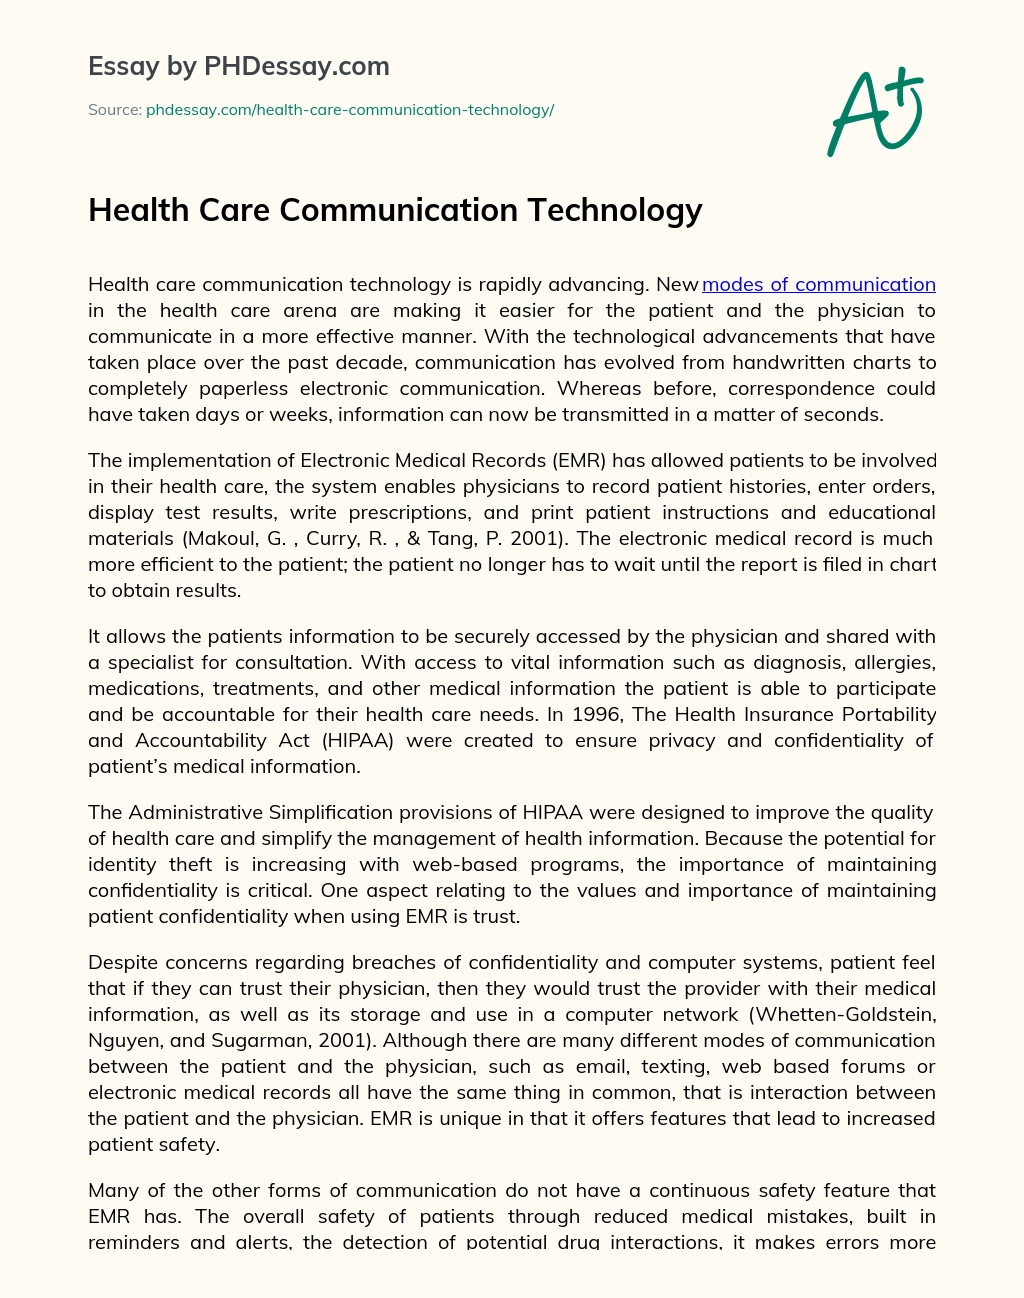 Health Care Communication Technology essay